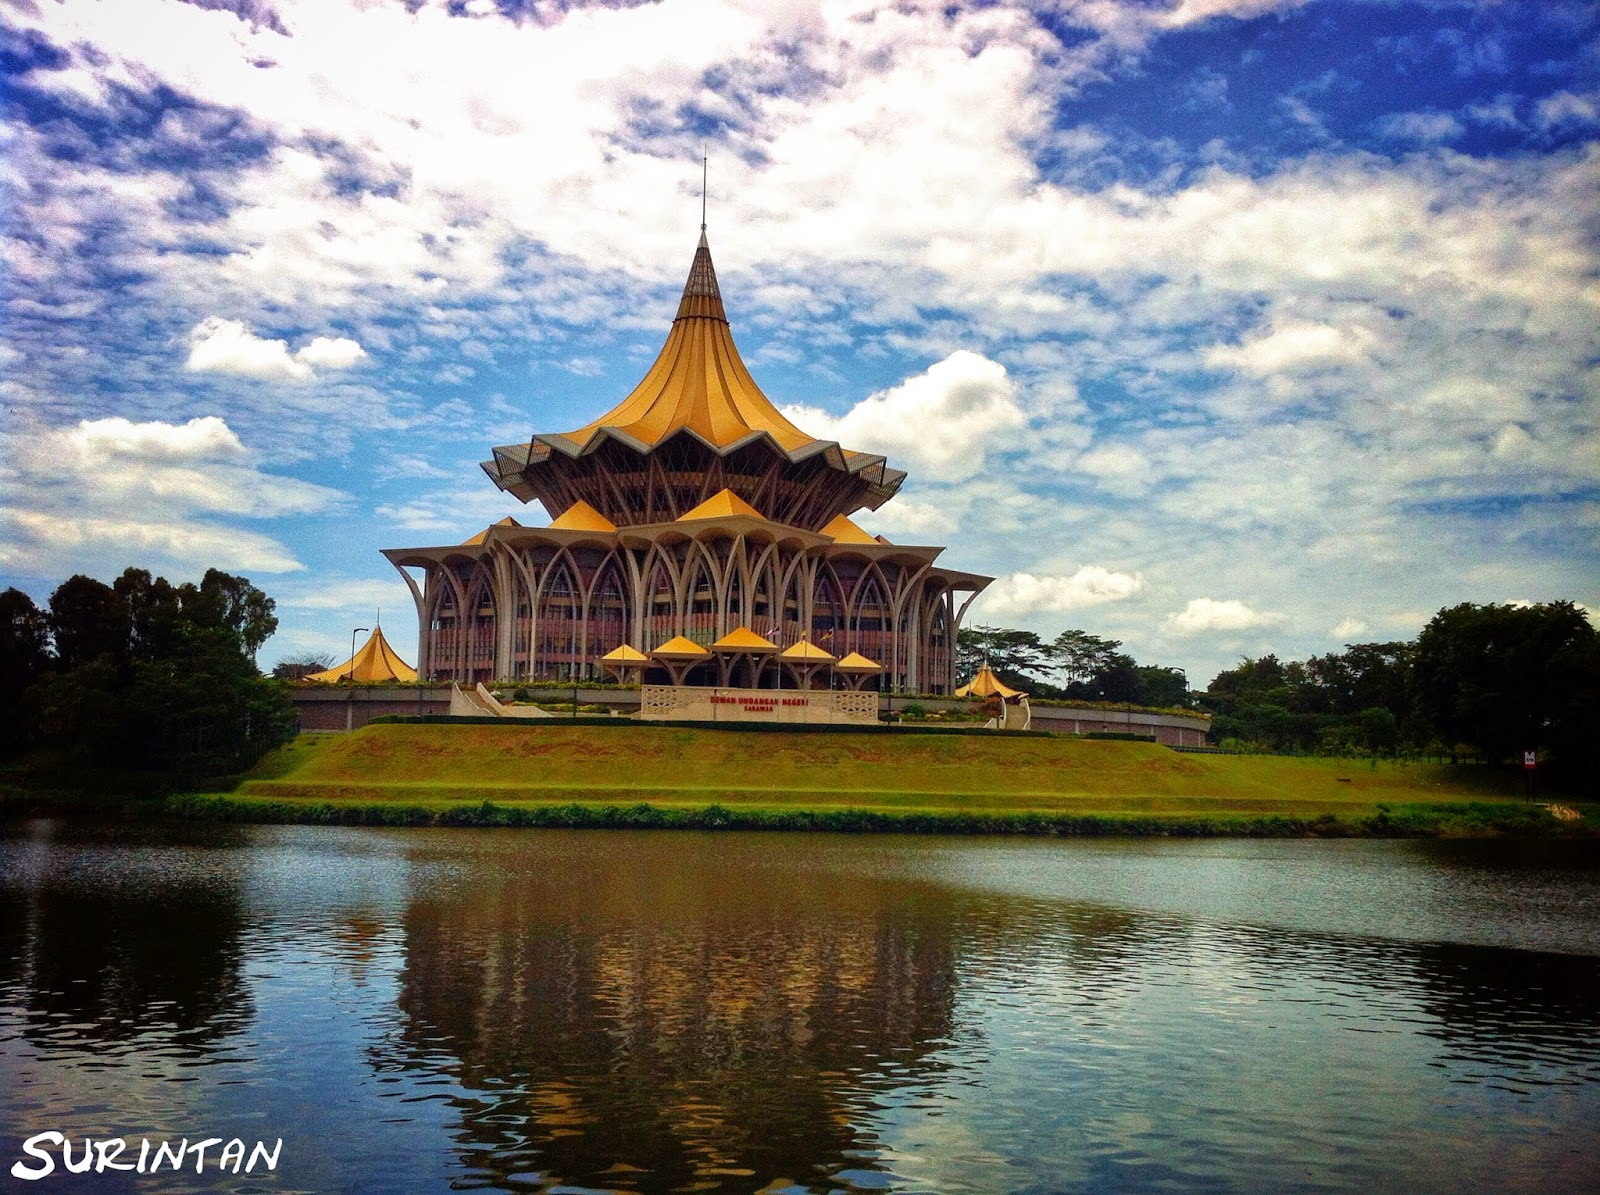 iPhone 4: Kuching Waterfront, Kuching, Sarawak Trip | Surintan iPhone